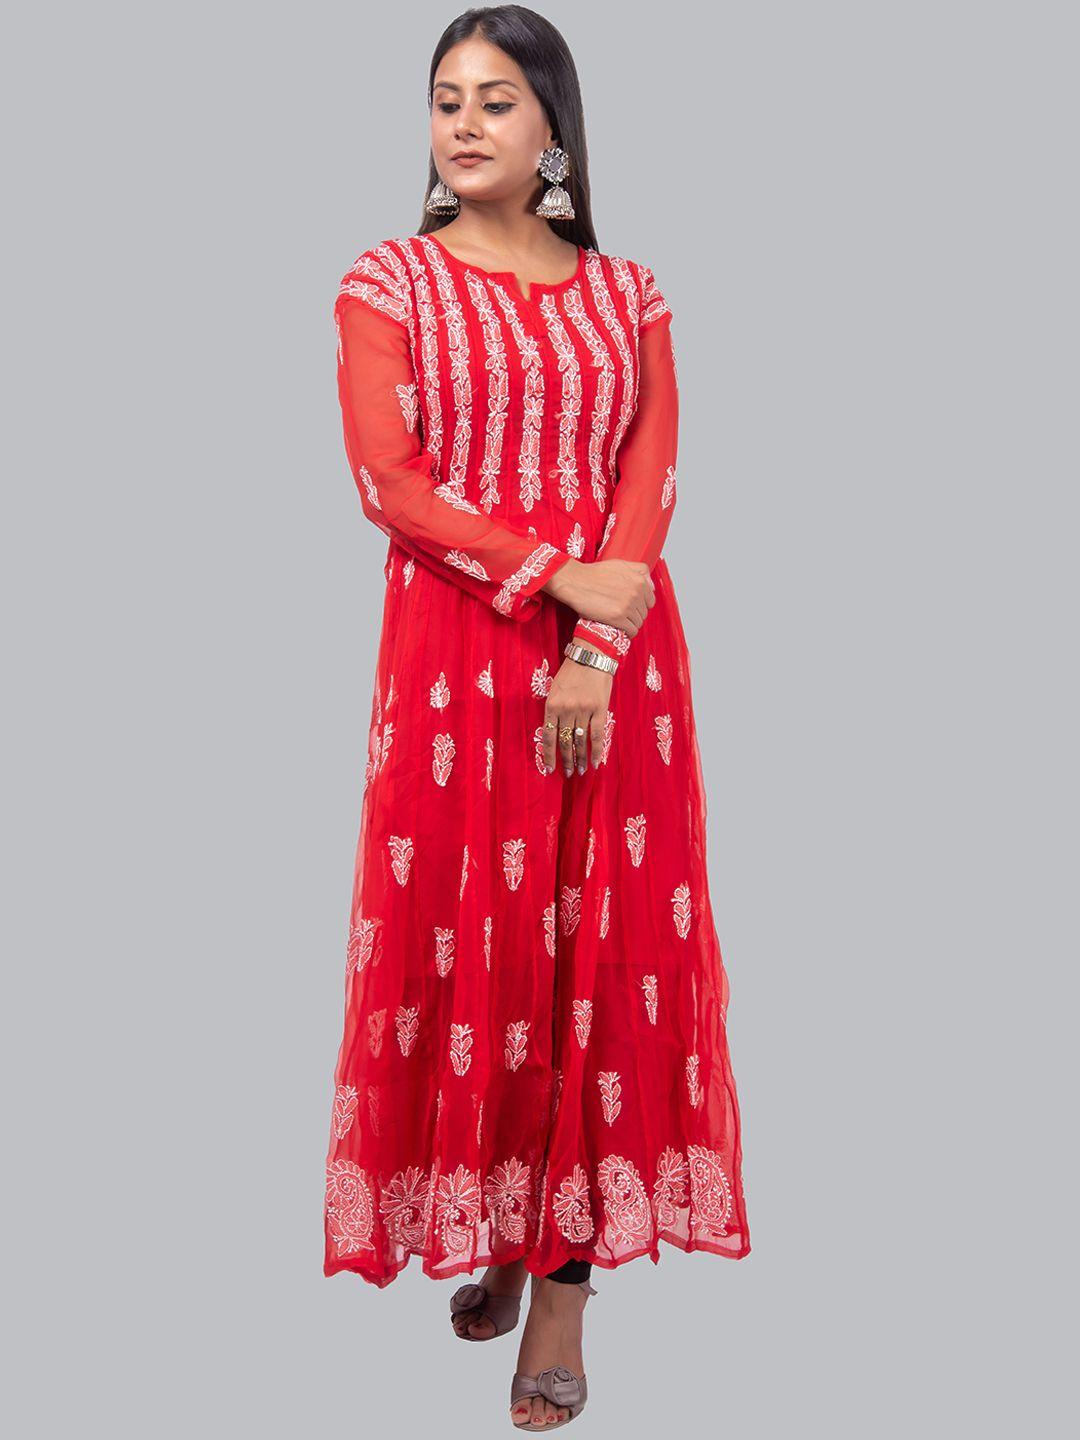 fawoment women red & white chikankari embroidered georgette a-line kurta